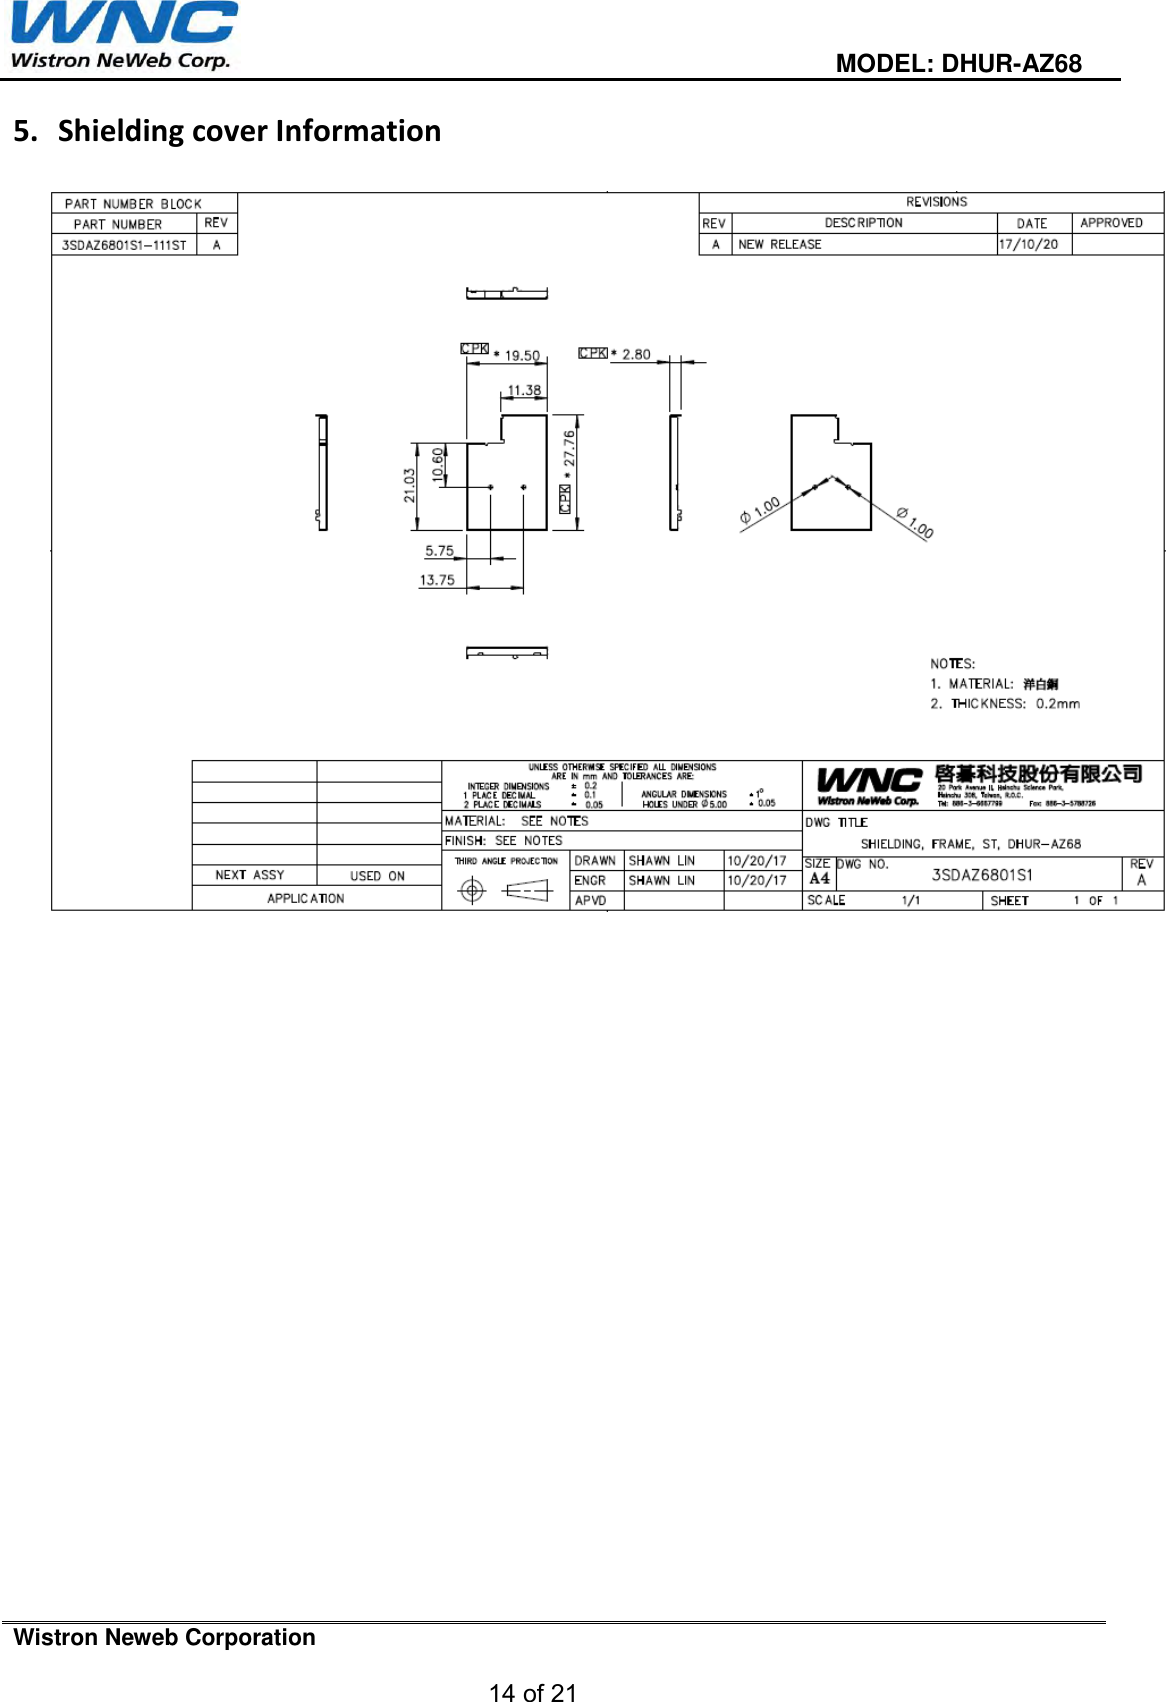                                                                                         MODEL: DHUR-AZ68  Wistron Neweb Corporation  14 of 21   5.  Shielding cover Information                          